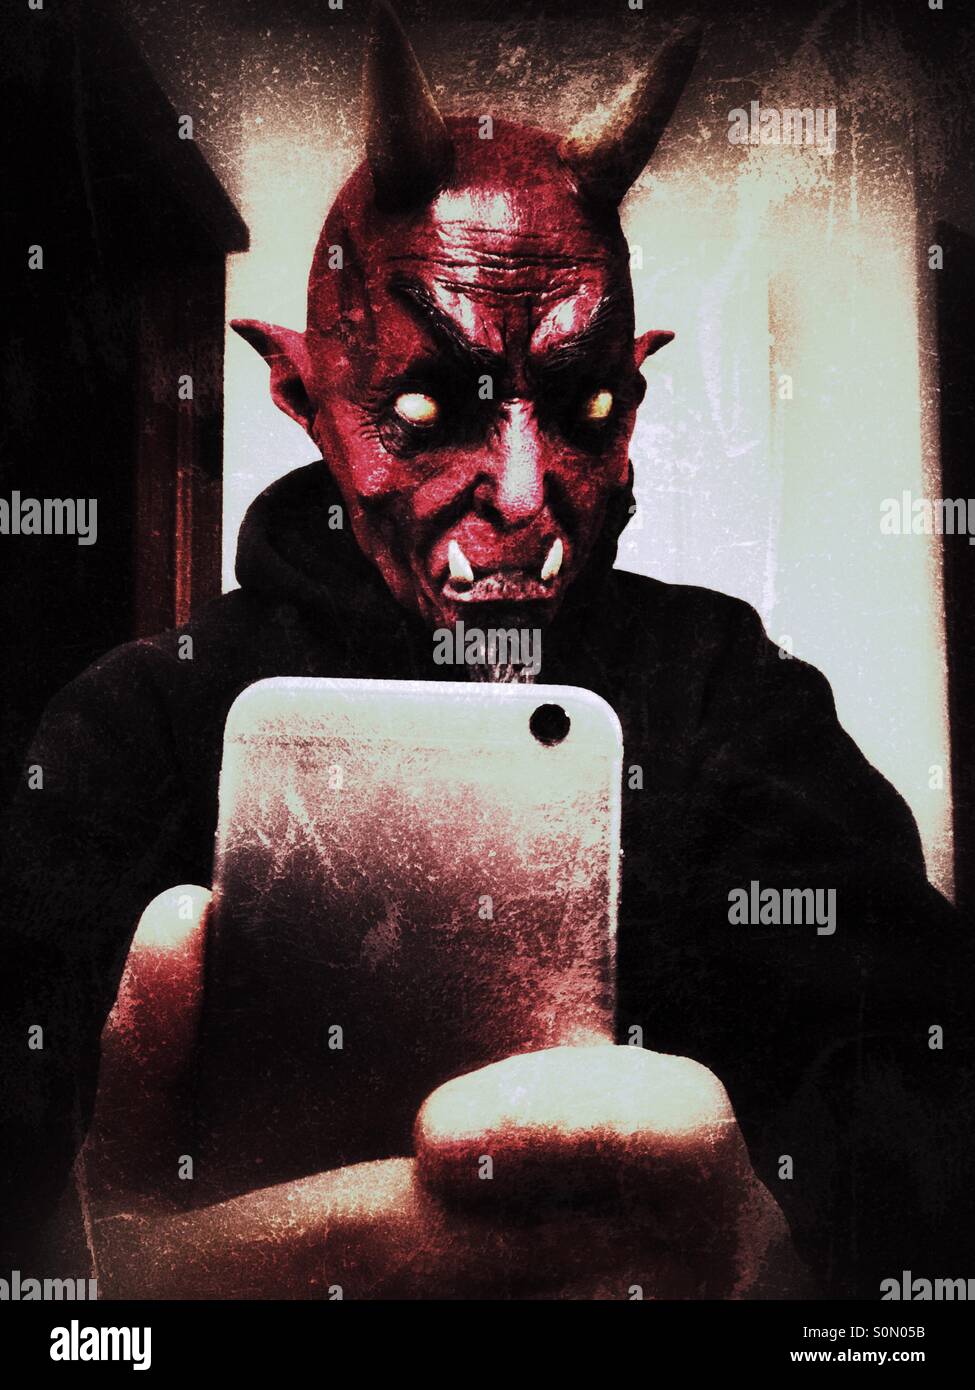 Man in a devil mask takes a selfie Stock Photo